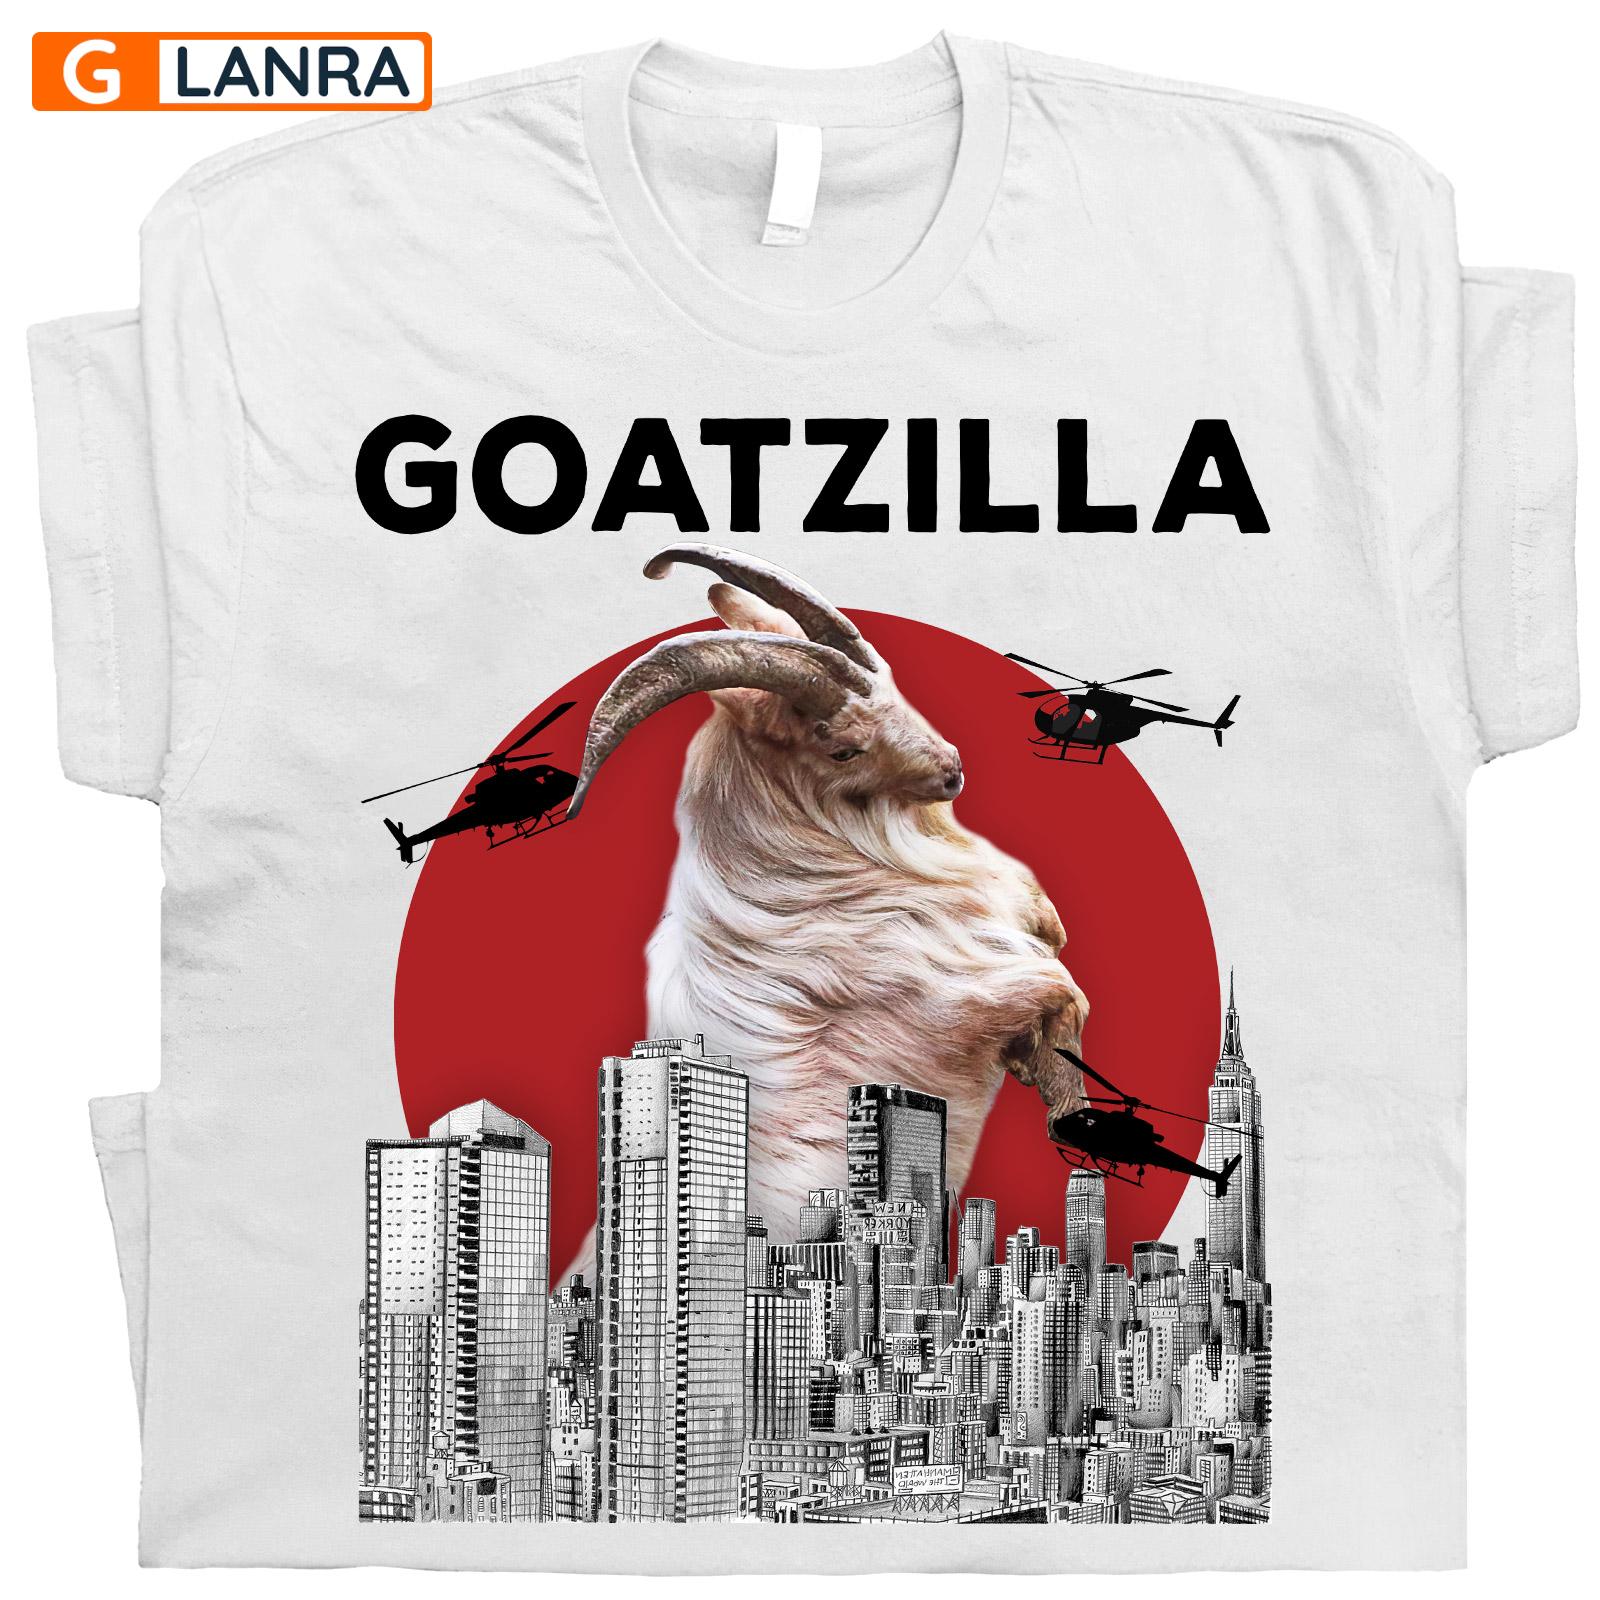 Goatzilla Shirt, Goat Shirt, Goat Farm Shirt, Farm Animal Shirt, Goat With Skyscraper And Helicopter Shirt, T-Shirt, Tee